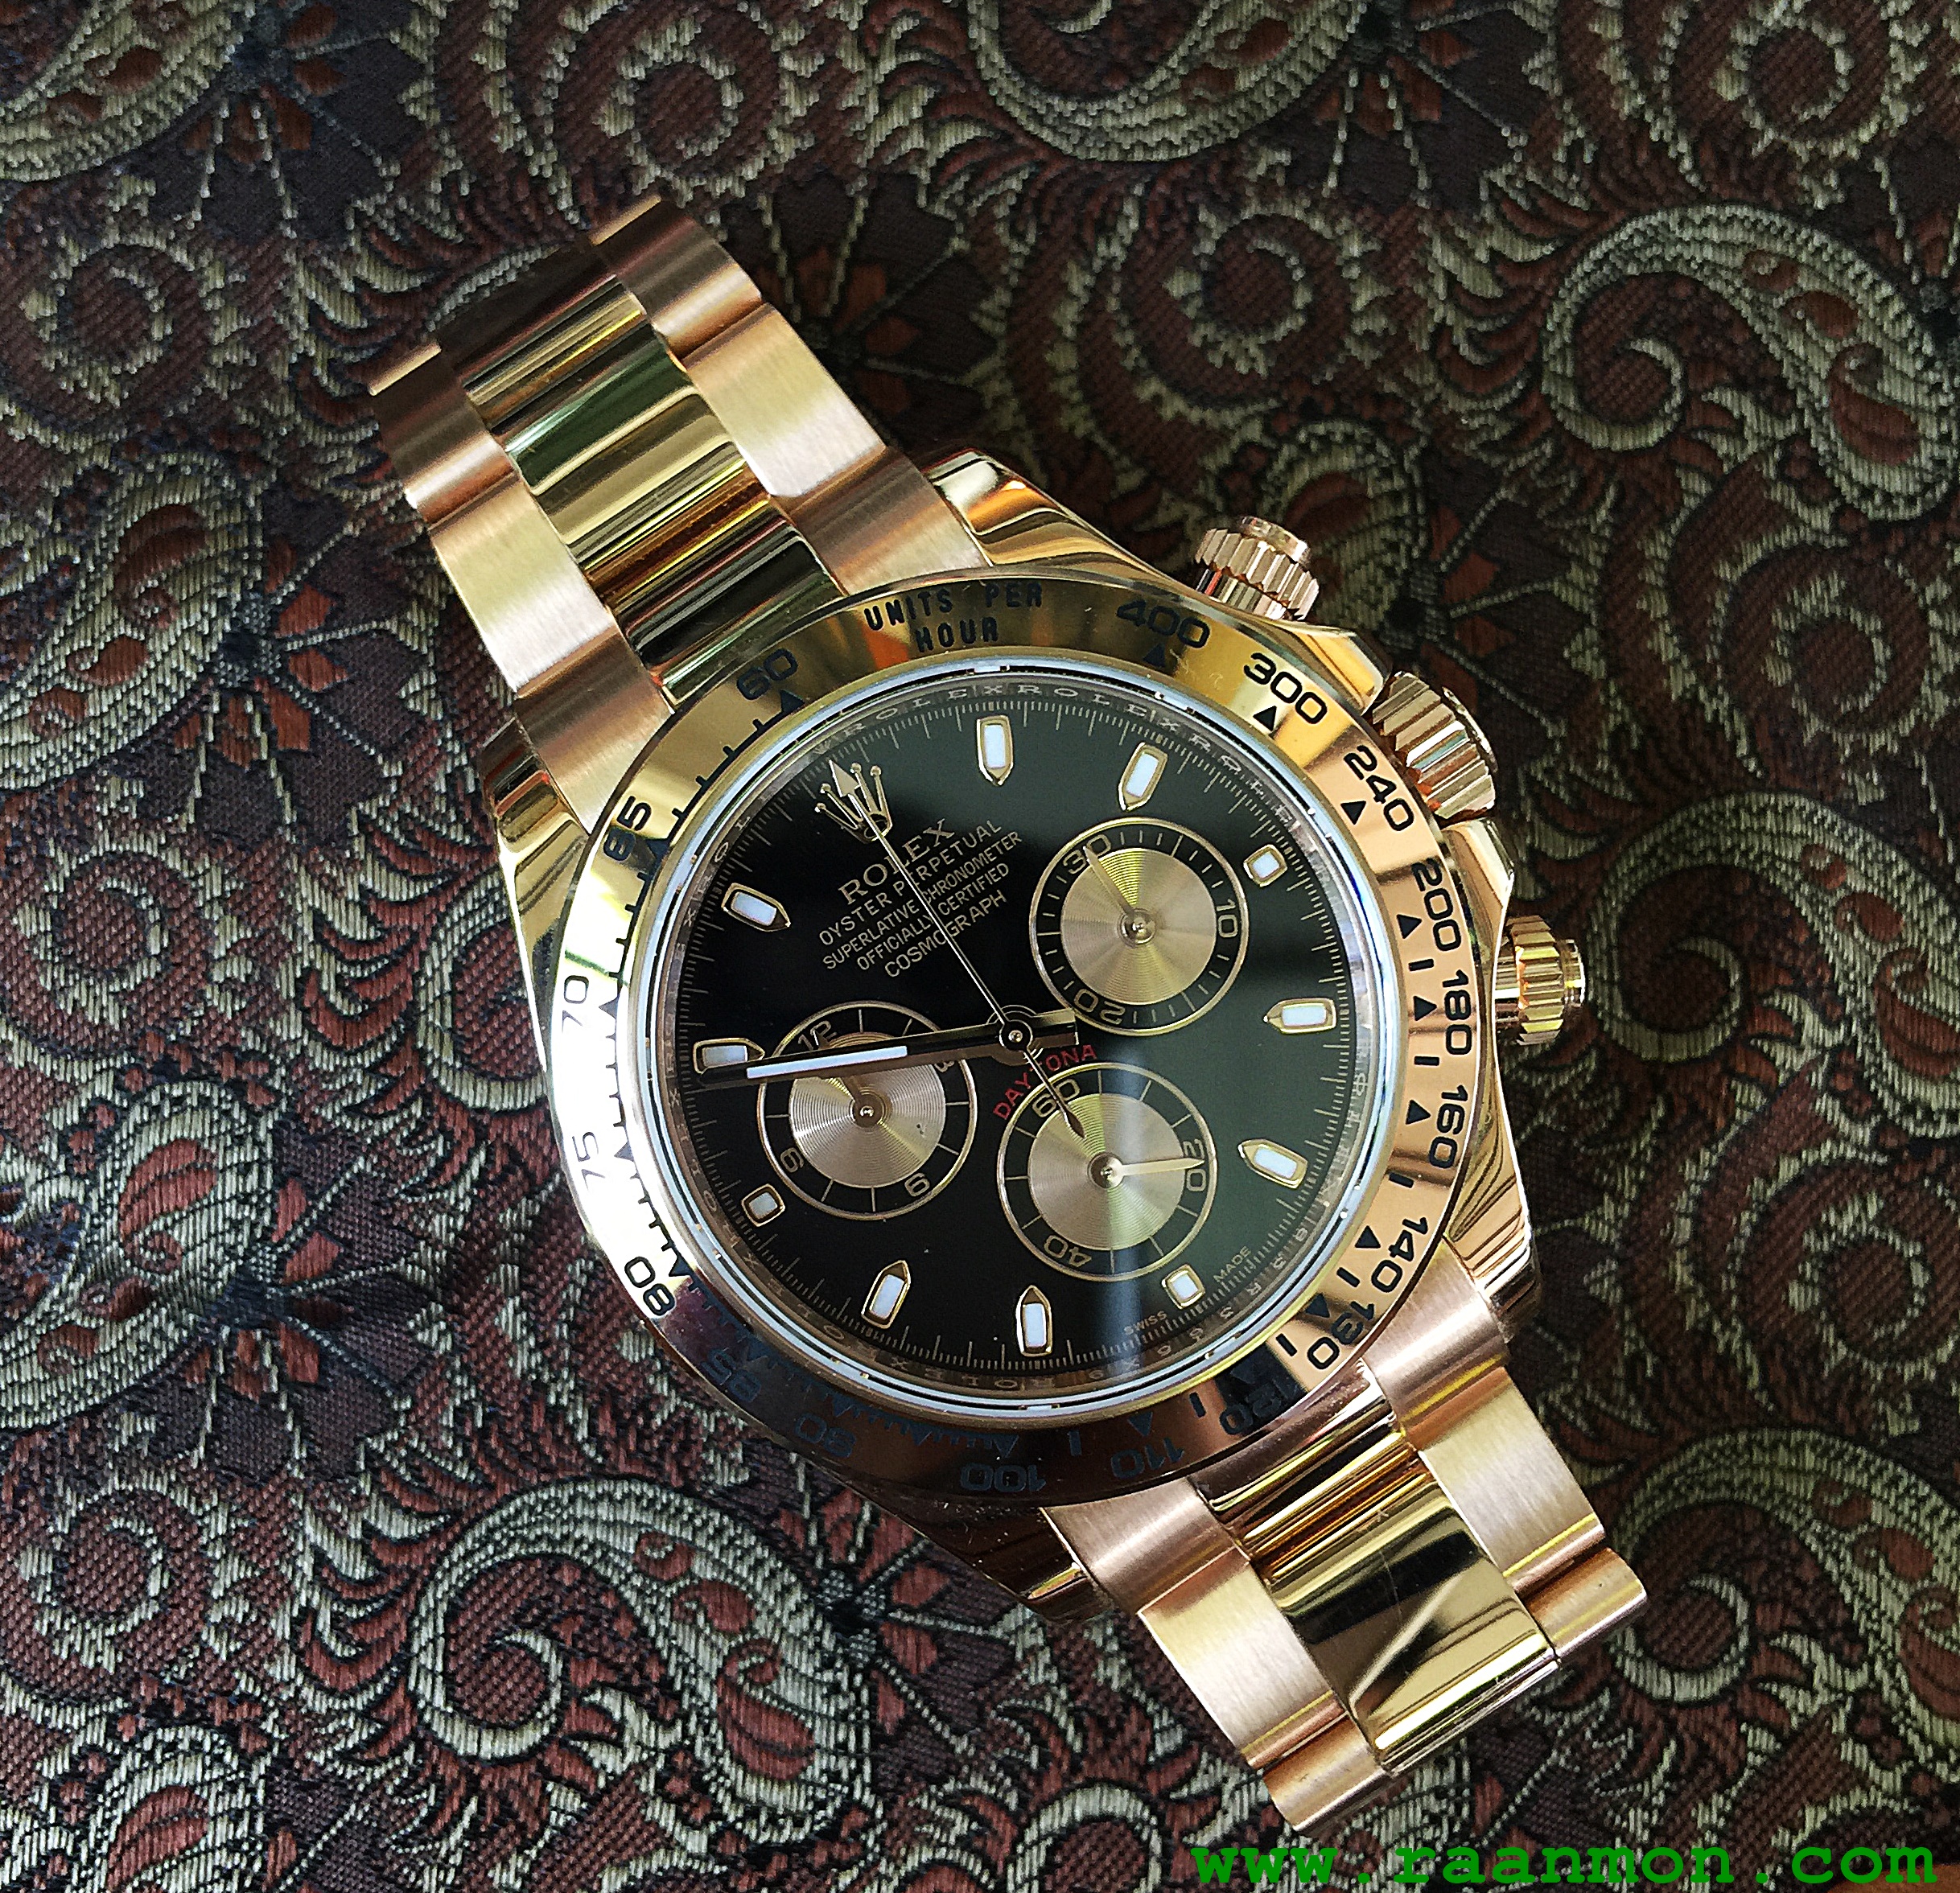 Rolex นาฬิกามือสอง ราคาดี